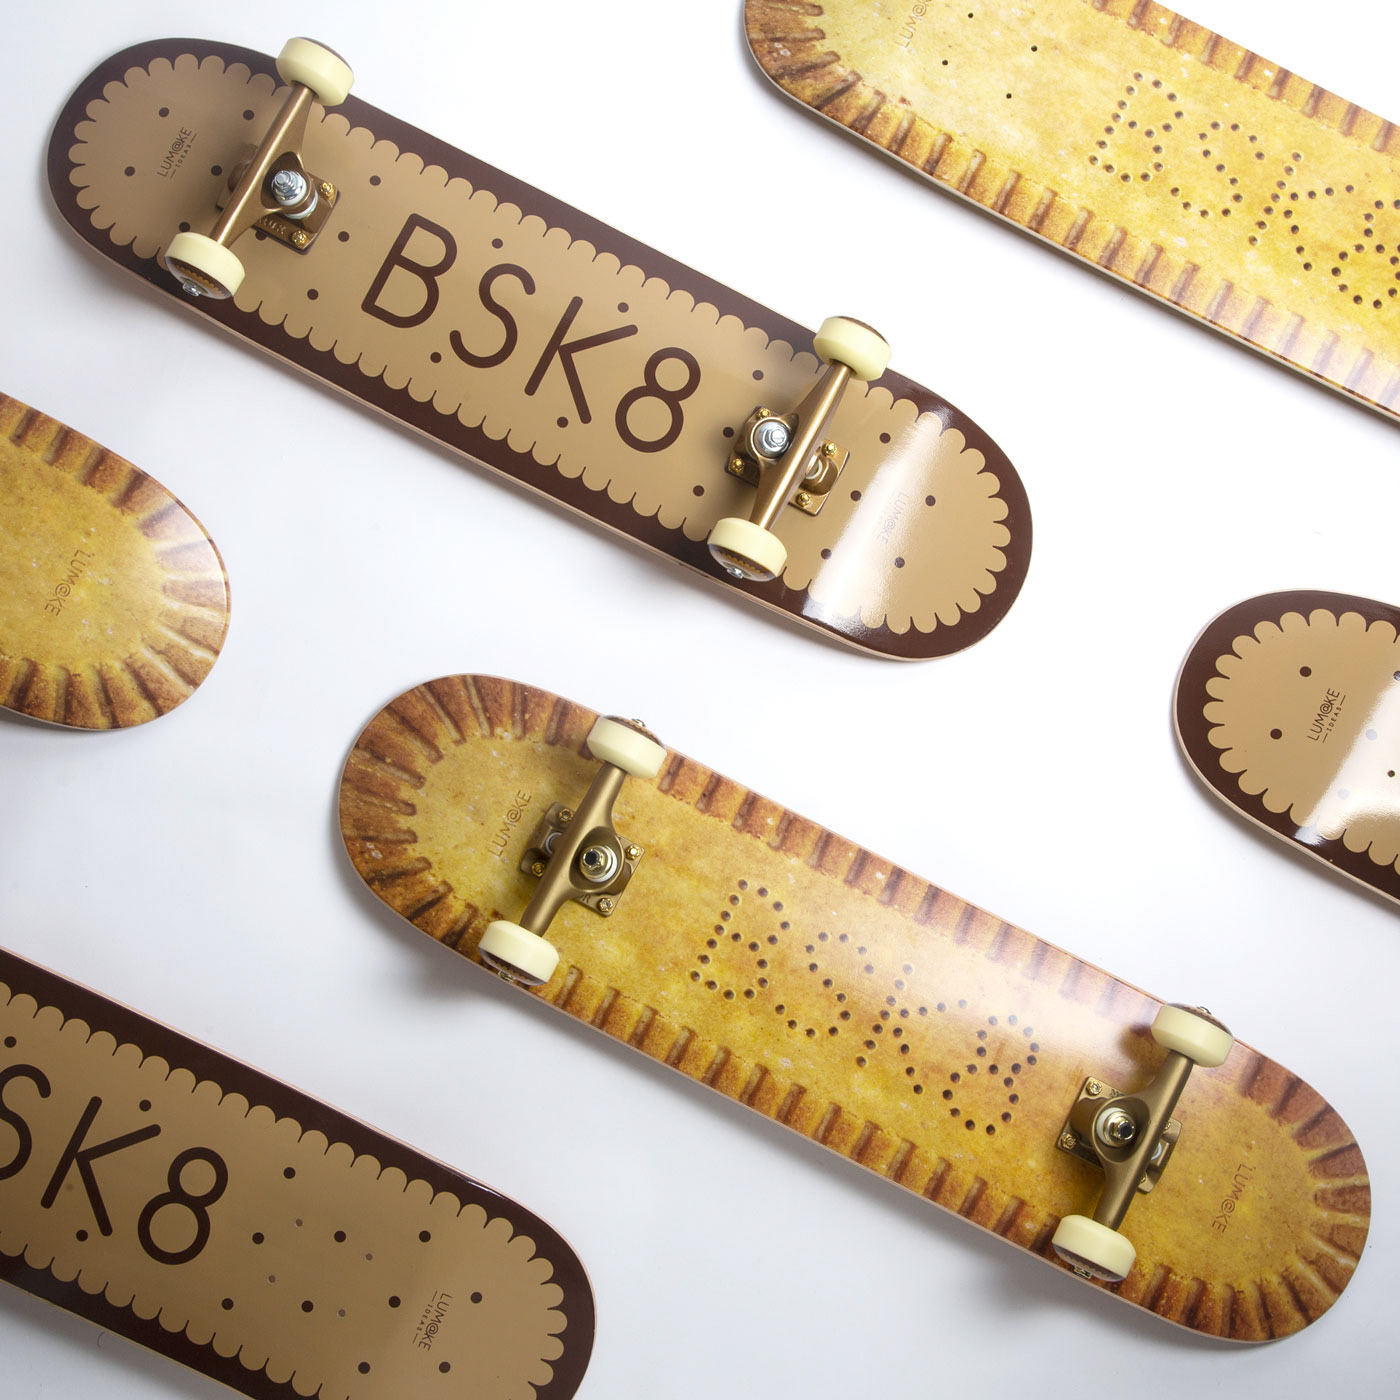 biscotto BSK8 design funny ideas grafica skate LUM@KE lumake ideas Sk8 skate skateboard